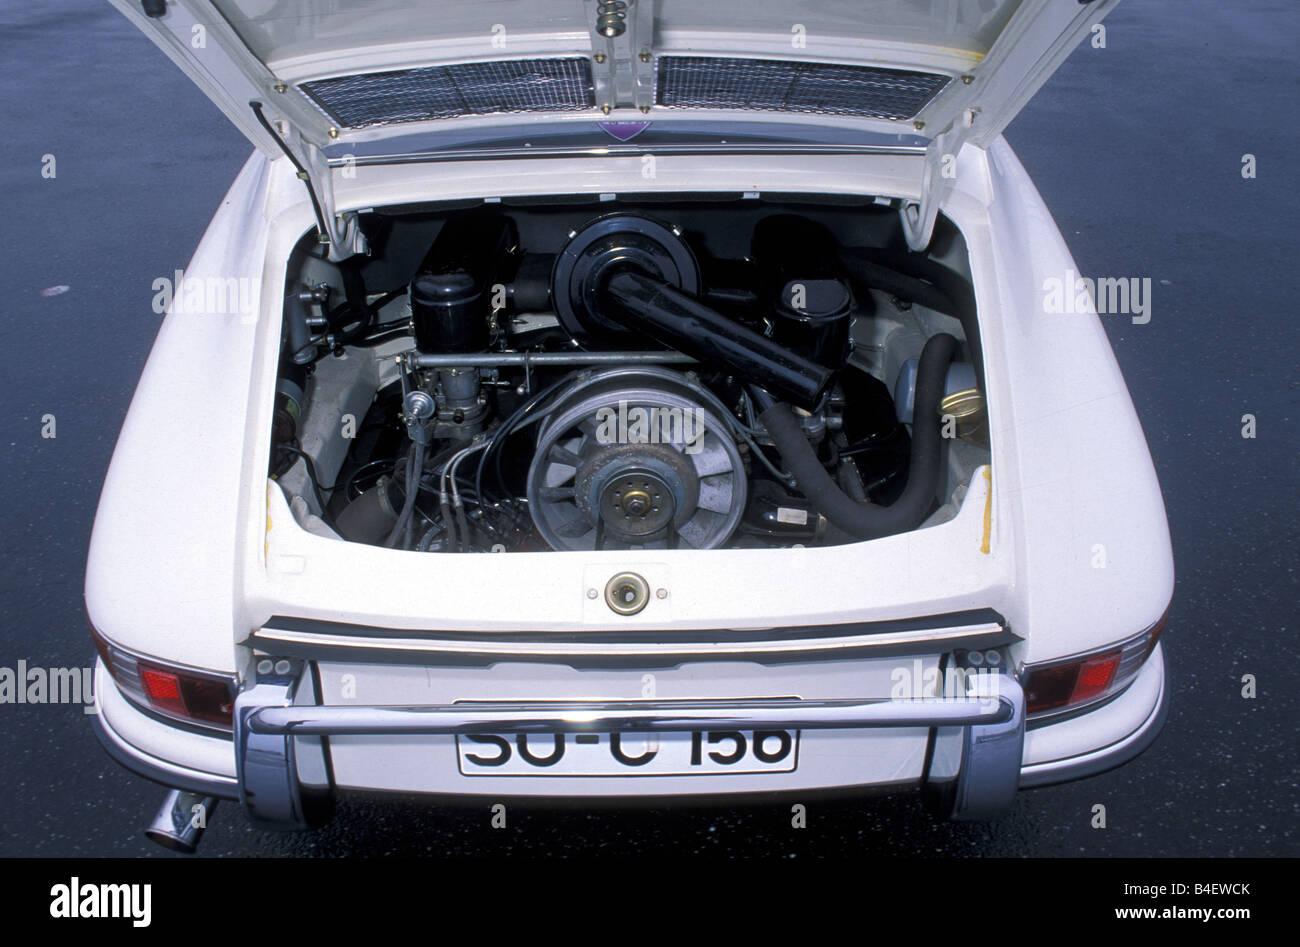 Car, Porsche 911, sports car, Coupé, Coupe, model year 1964, vintage car, 1960s, sixties, white, engine compartment, engine , Mo Stock Photo